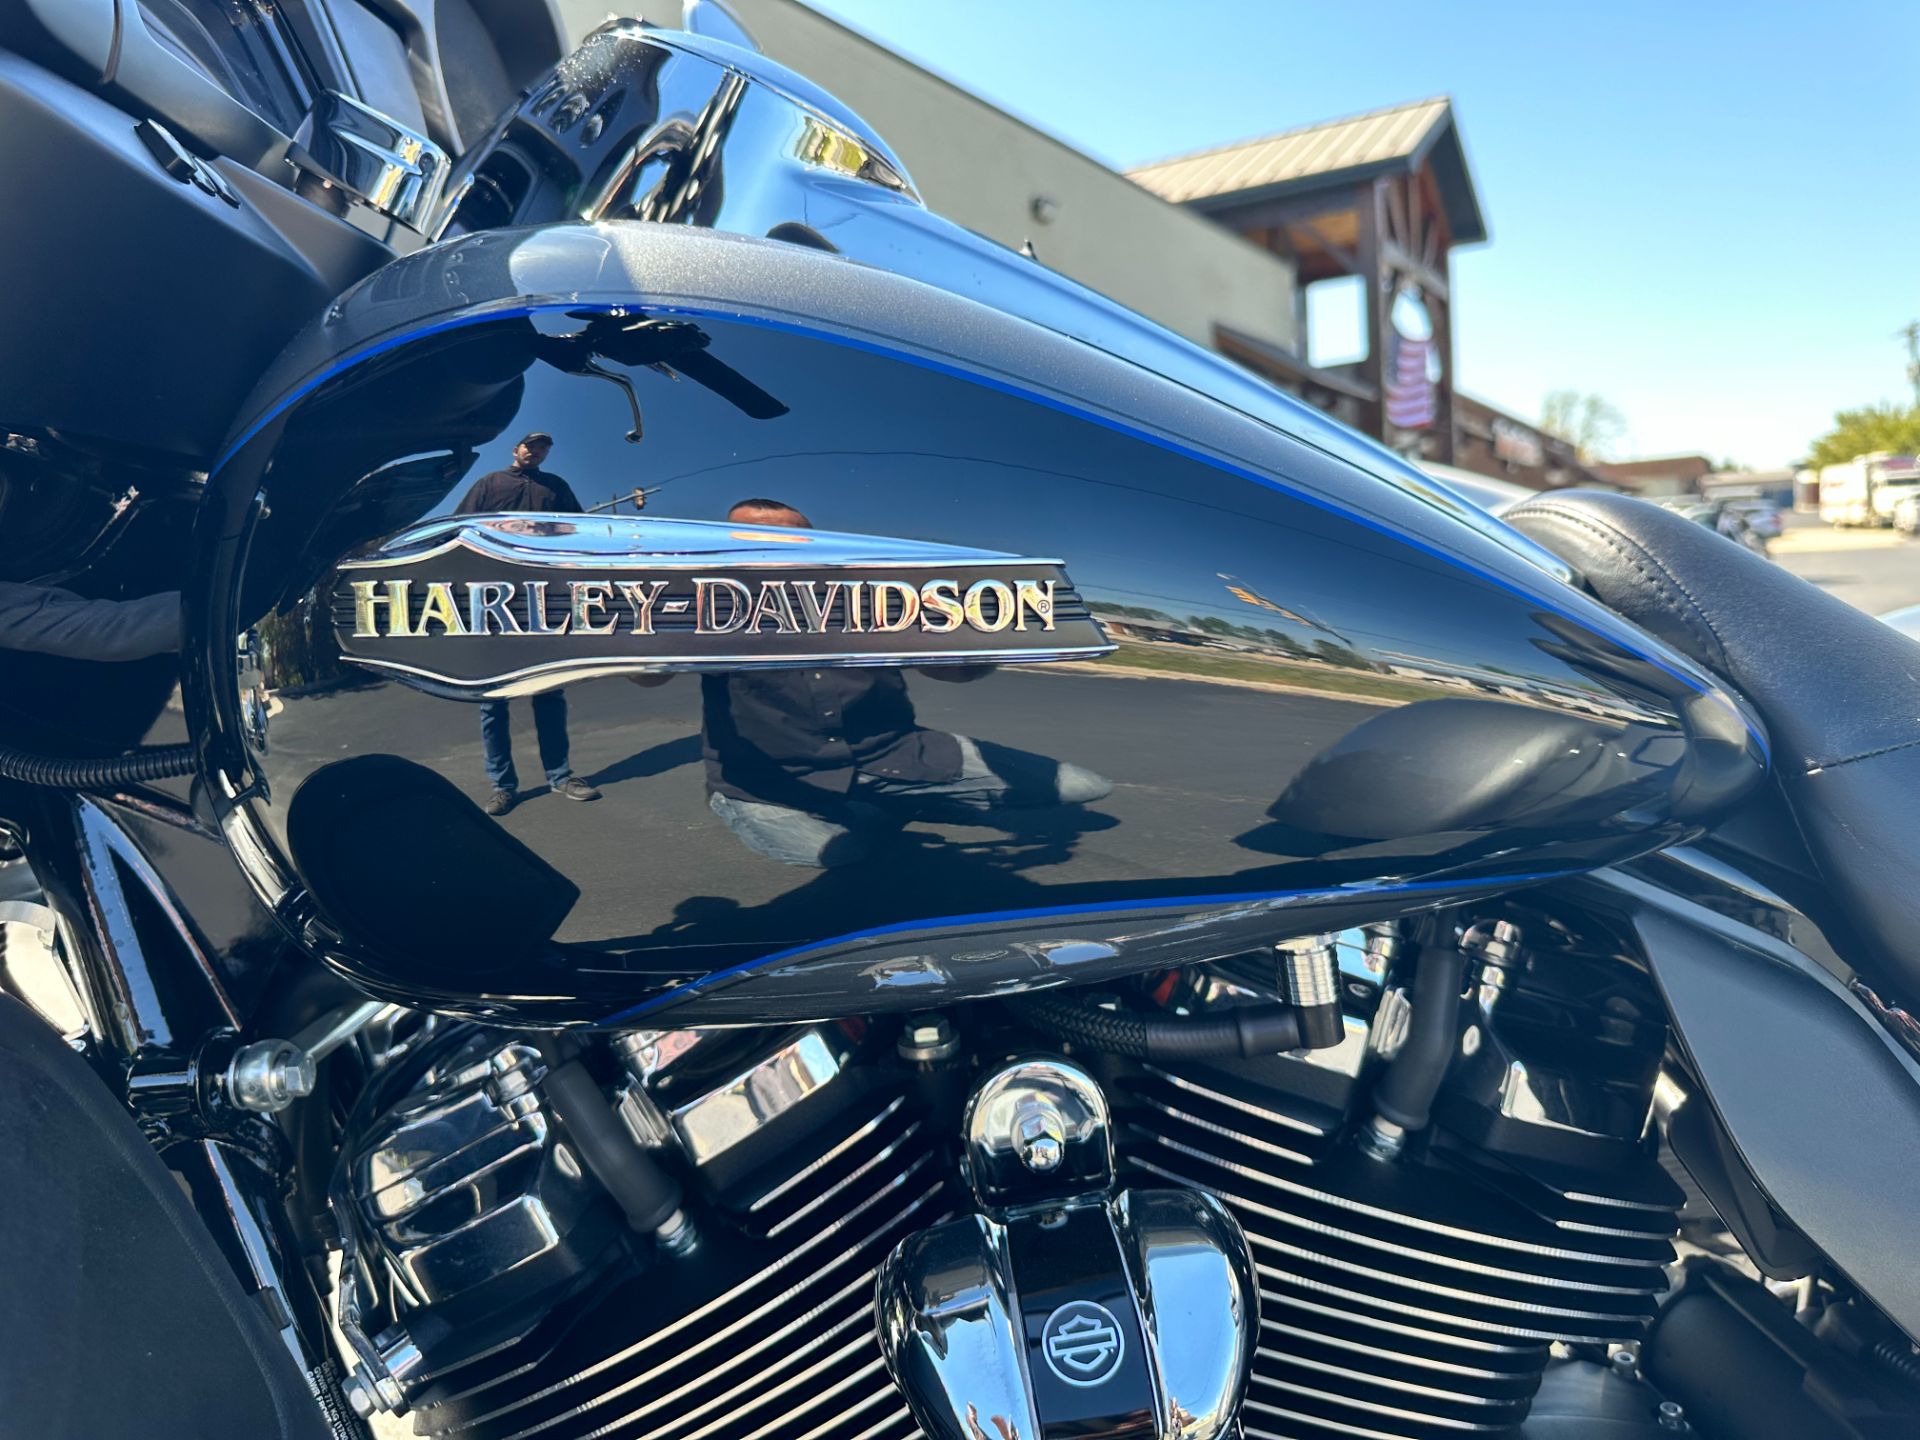 2021 Harley-Davidson Tri Glide® Ultra in Lynchburg, Virginia - Photo 22